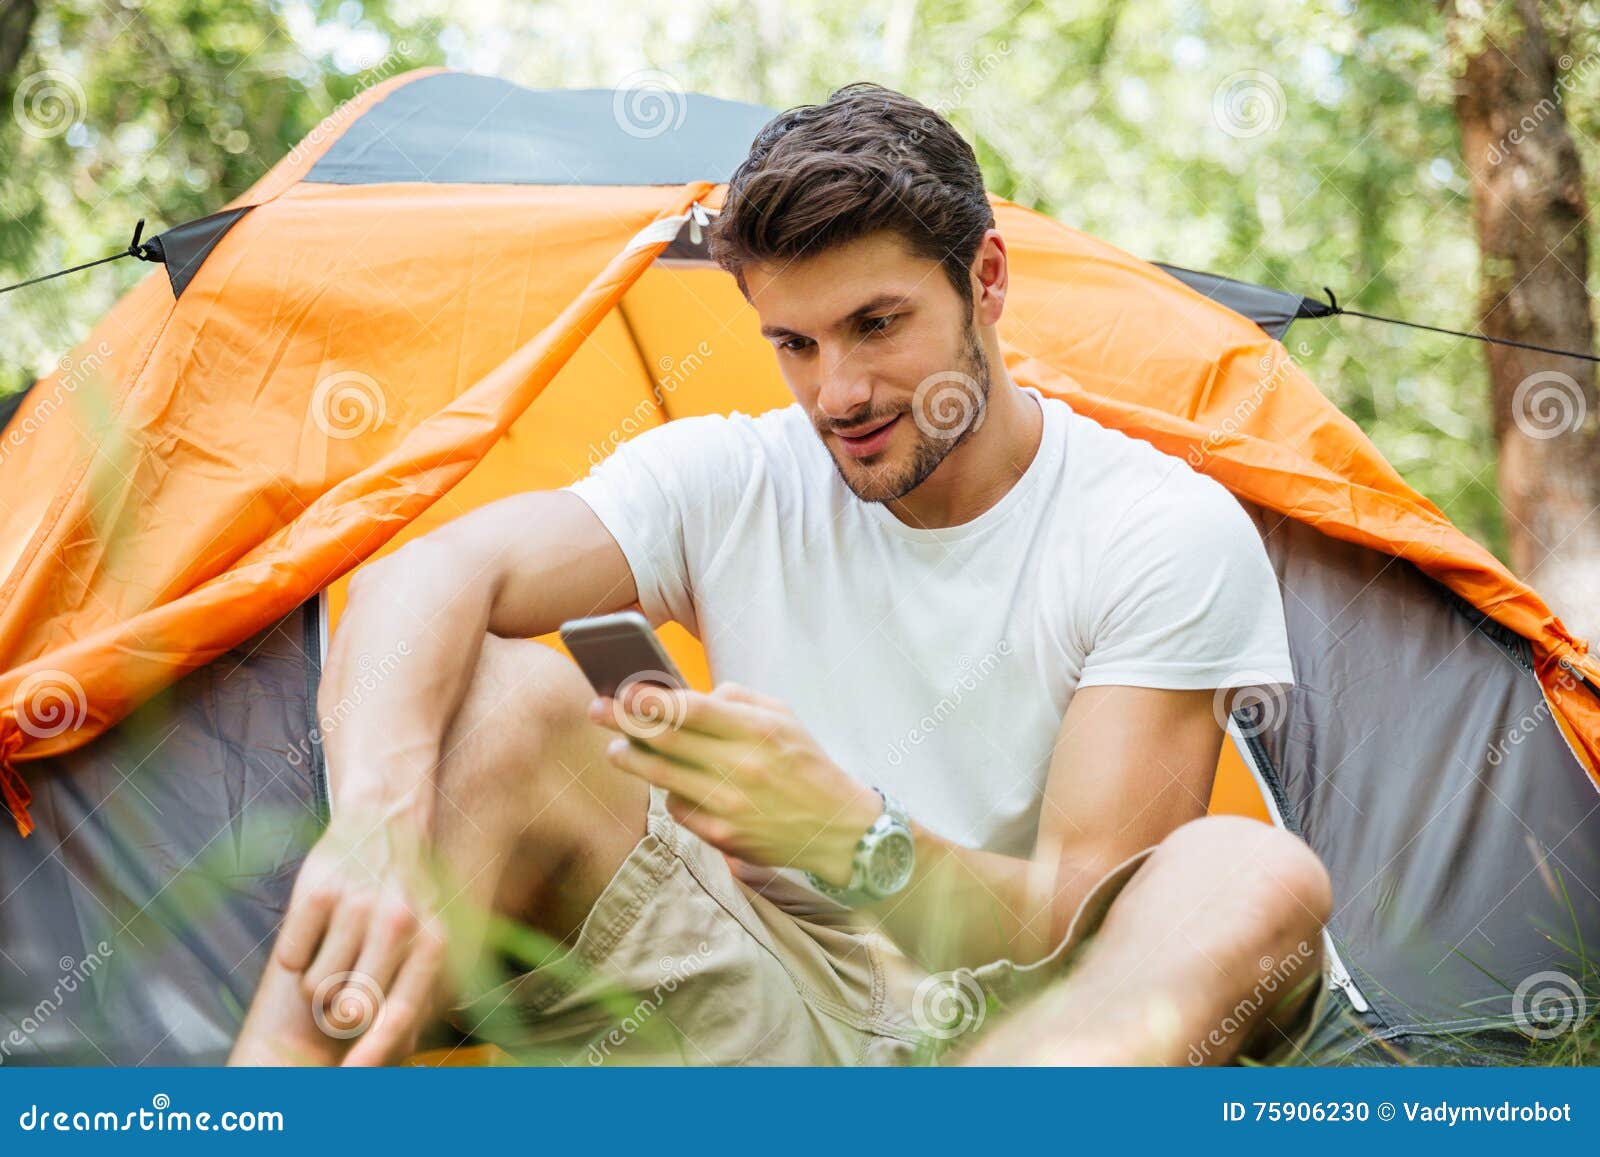 Camping men. Парни в палатке. Мужчина в палатке. Люди в палатке. Туризм мужчина.